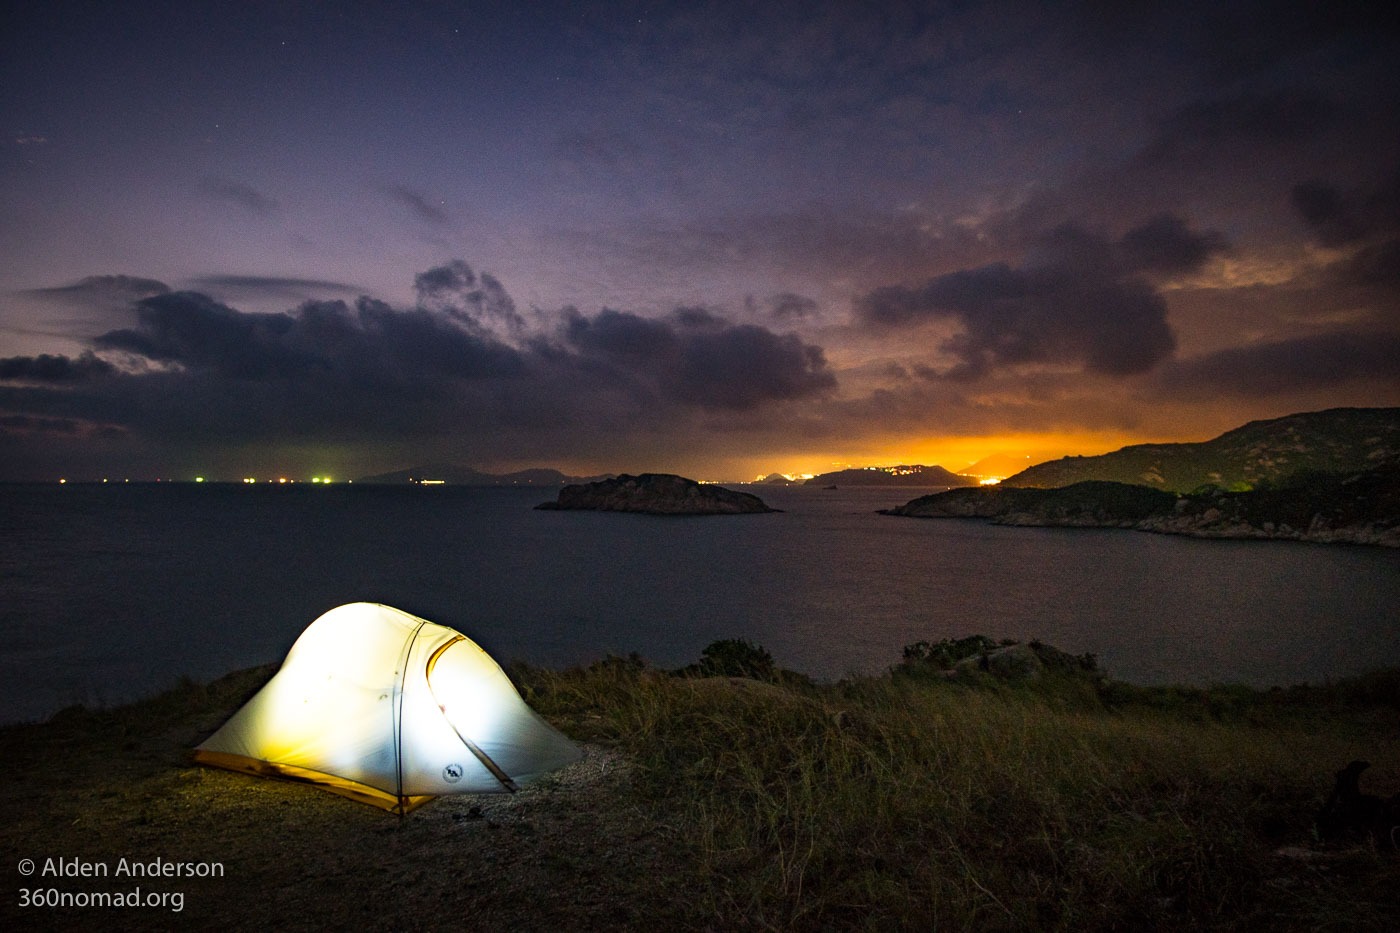 Camping on Po Toi island